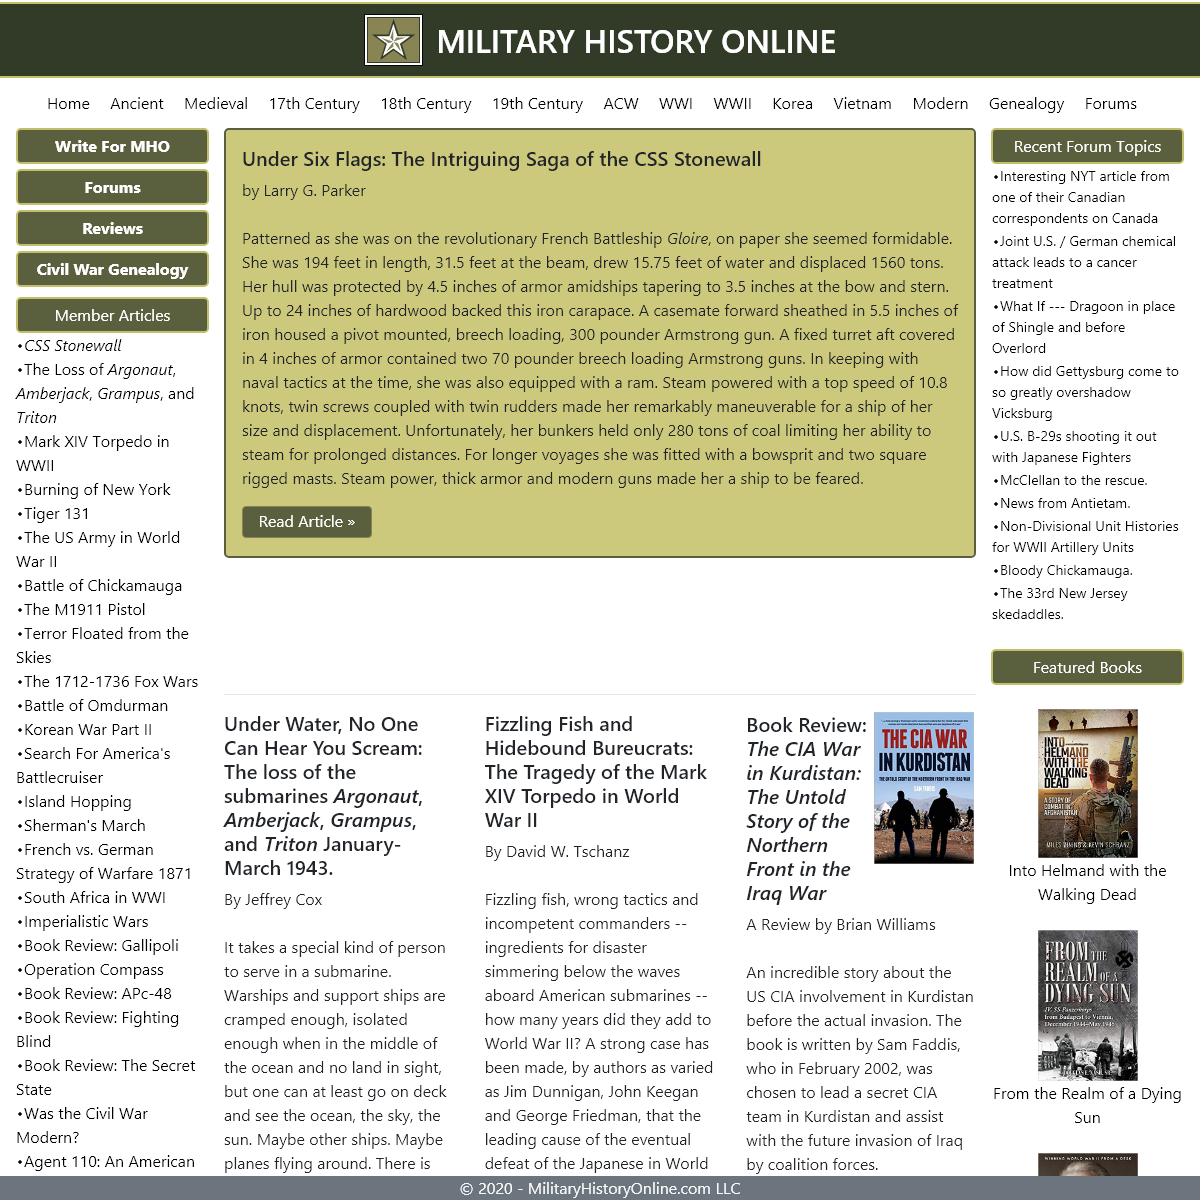 A complete backup of militaryhistoryonline.com